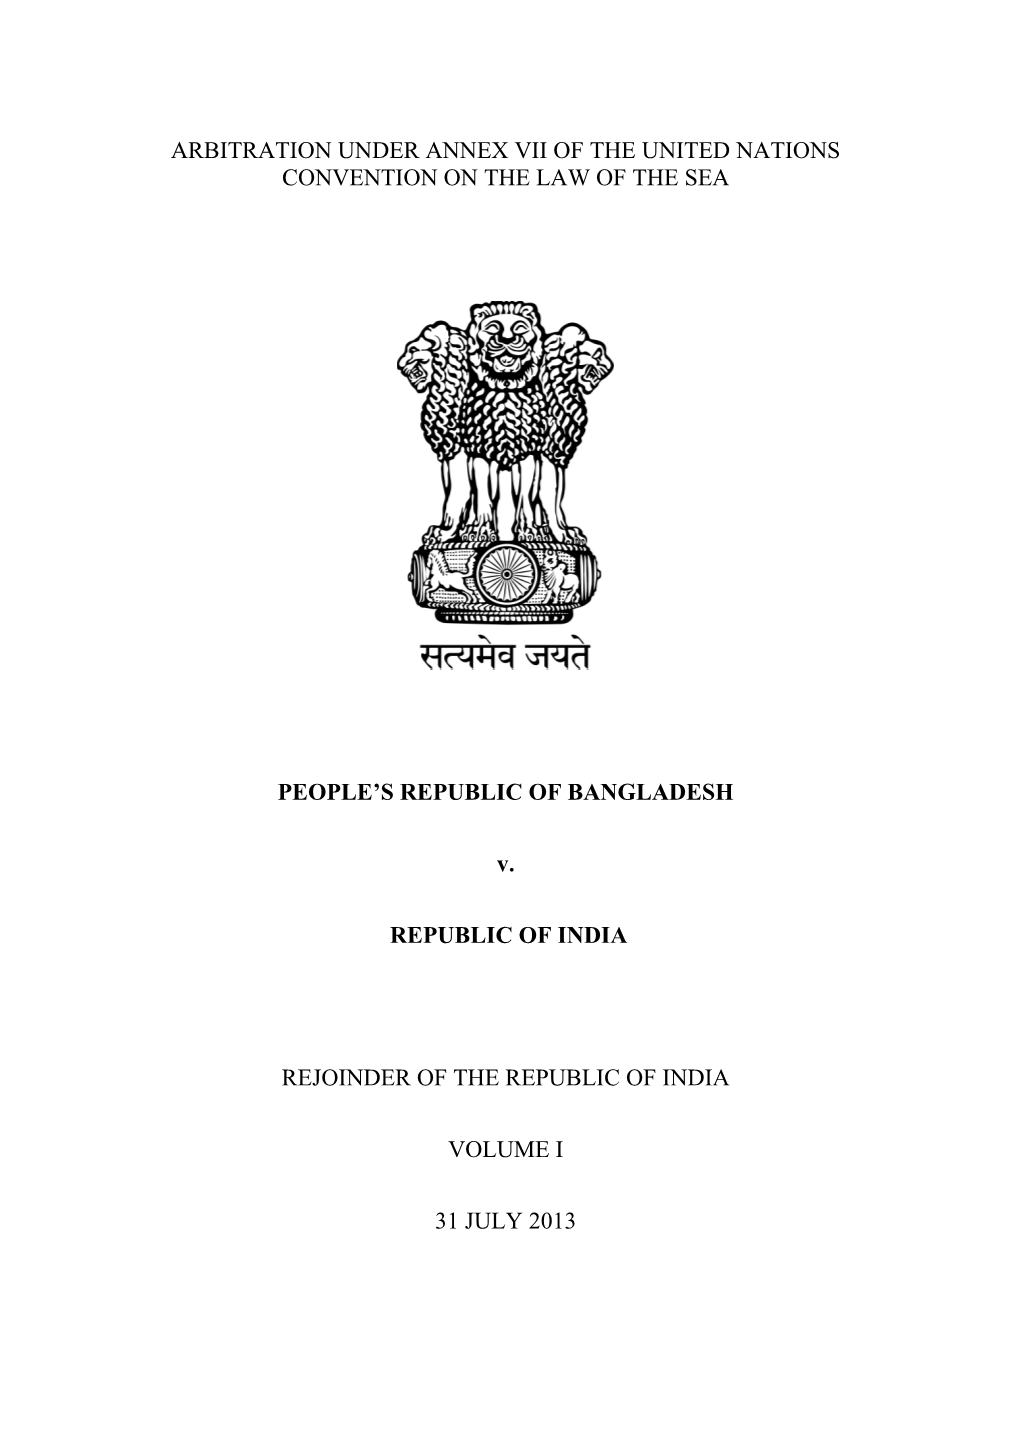 India's Rejoinder Vol I.Pdf